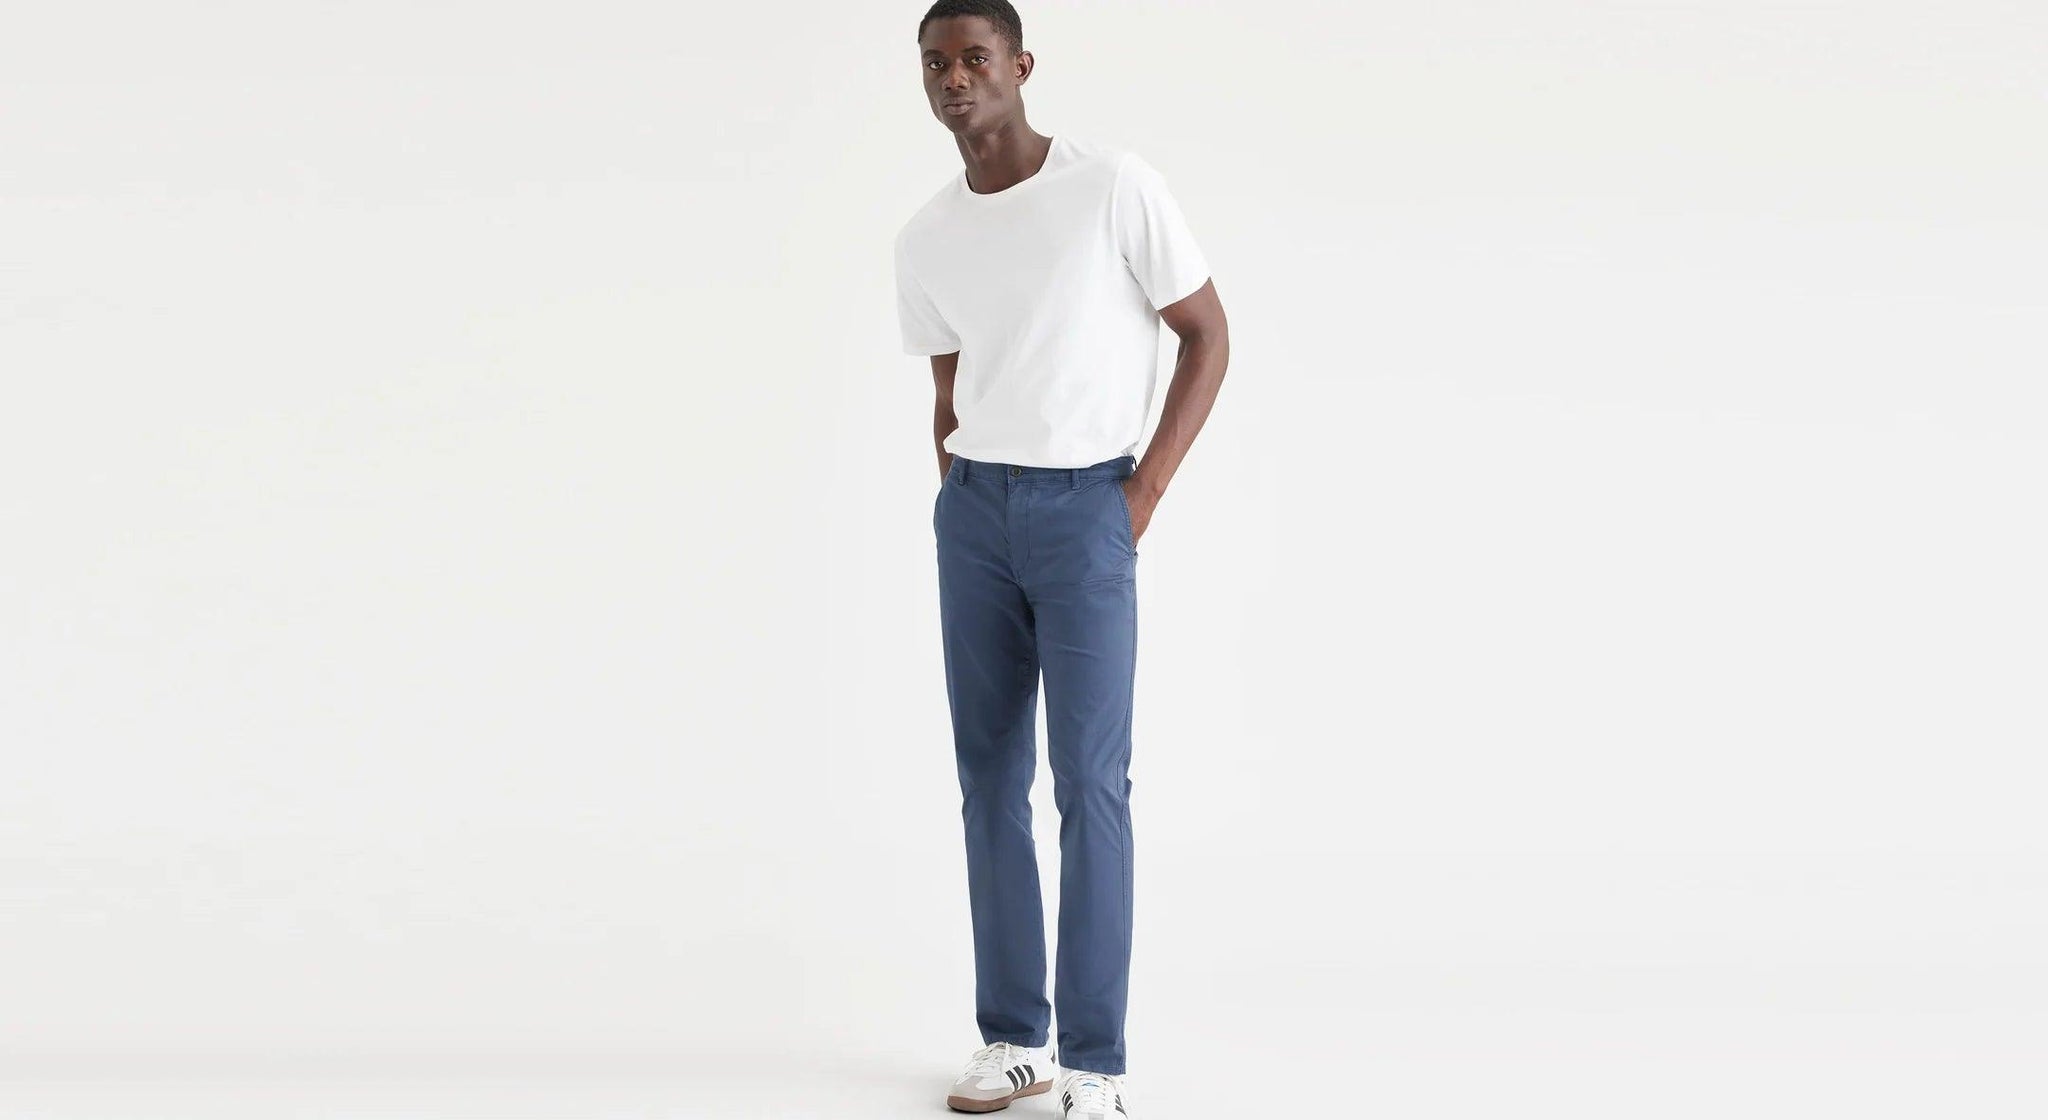 Pantalones Chinos Dockers® Slim Fit Original Ocean Blue - ECRU